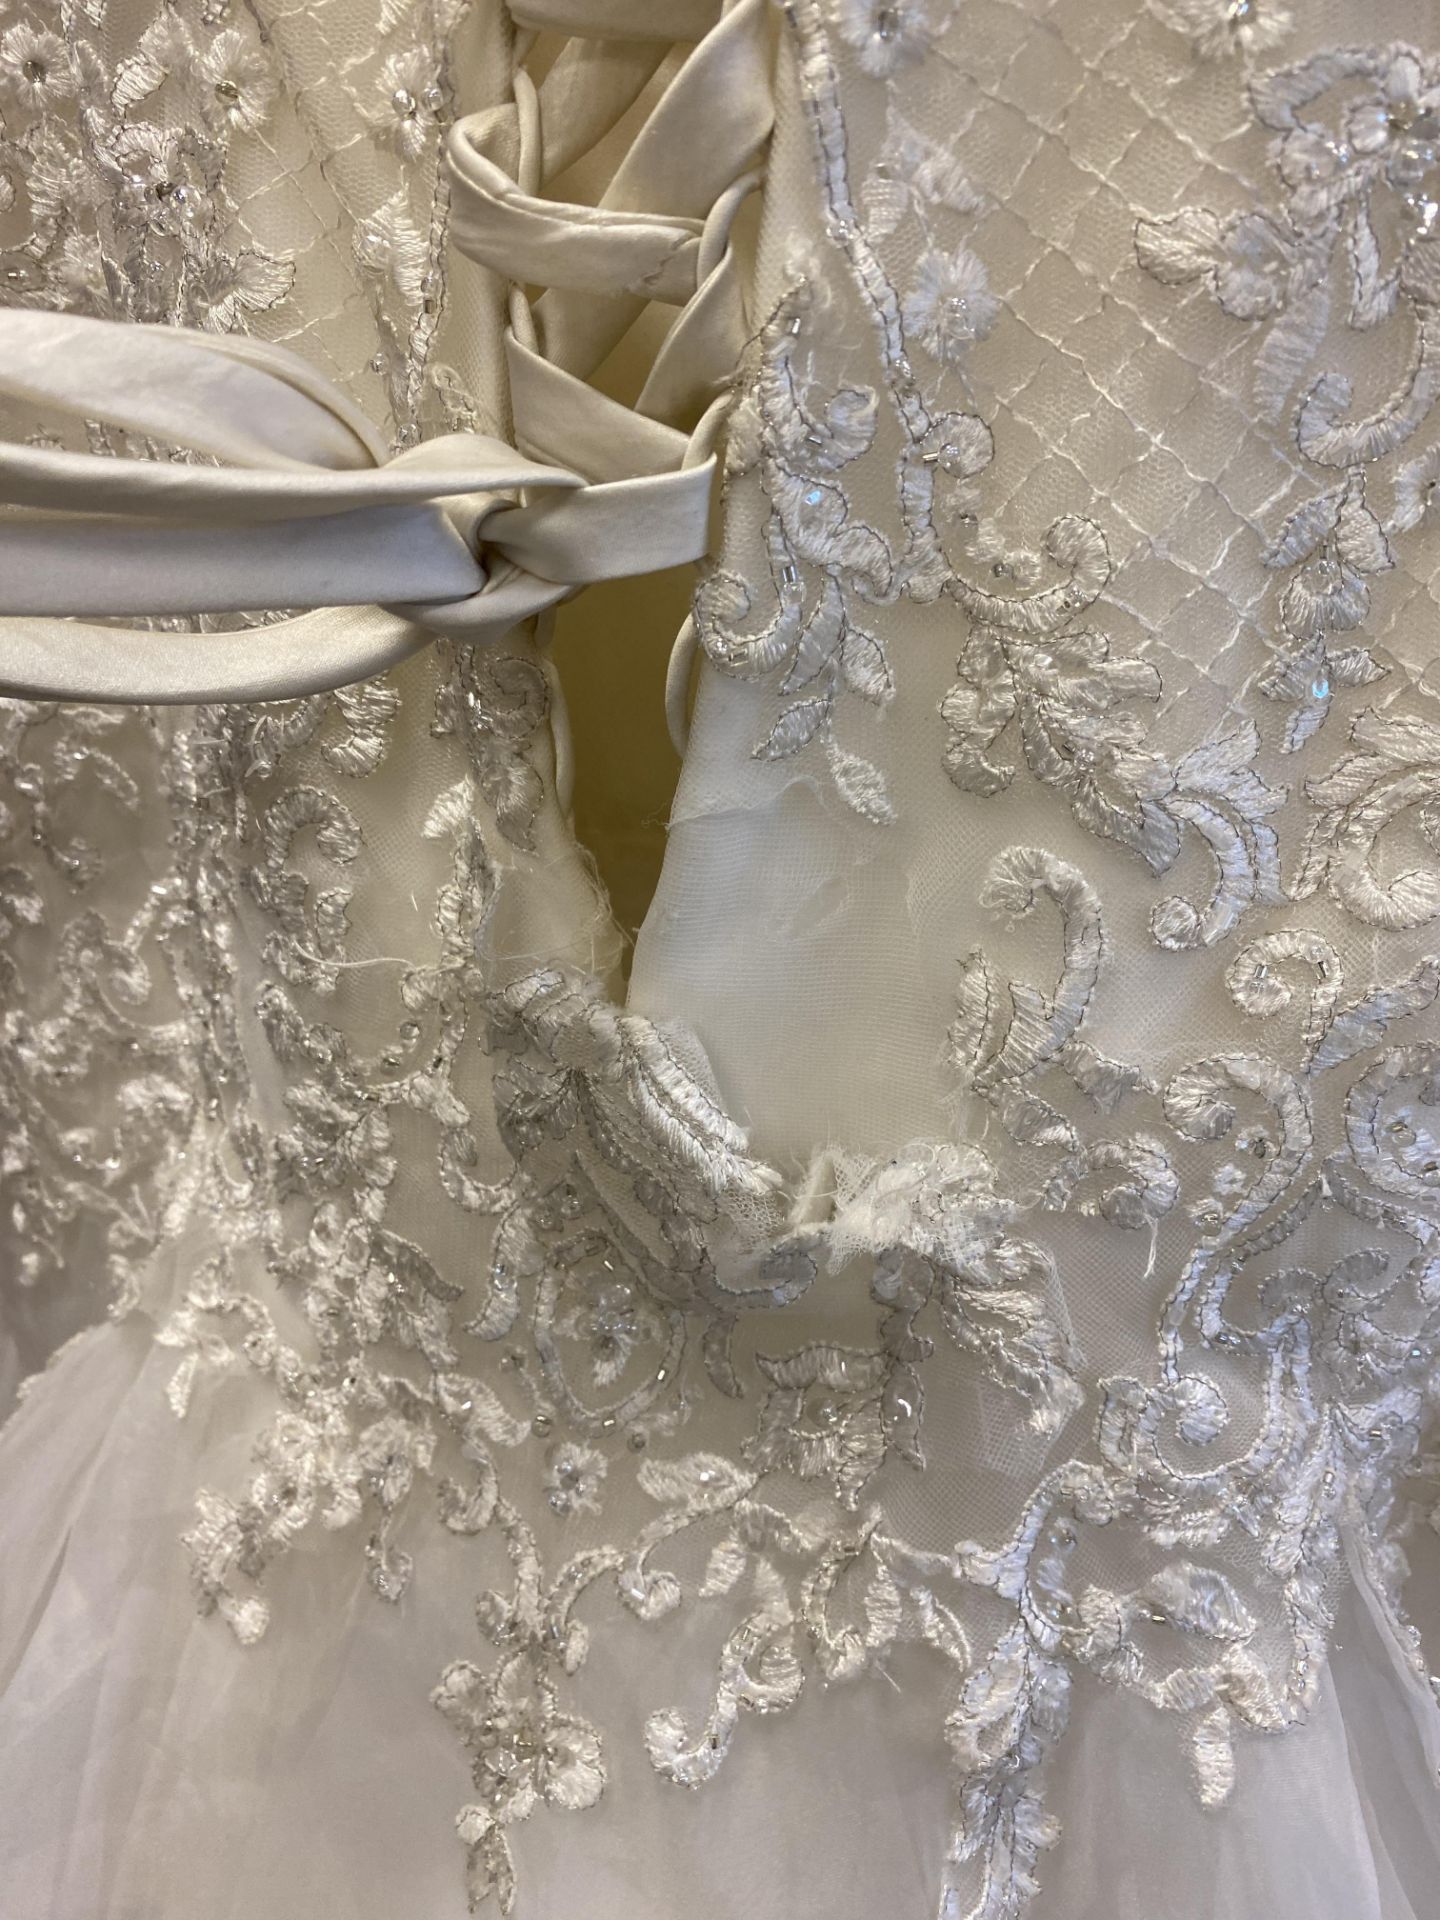 1 x REBECCA INGRAM 'Millicent' Strapless Mermaid Designer Wedding Dress RRP £1,200 UK12 - Image 10 of 10